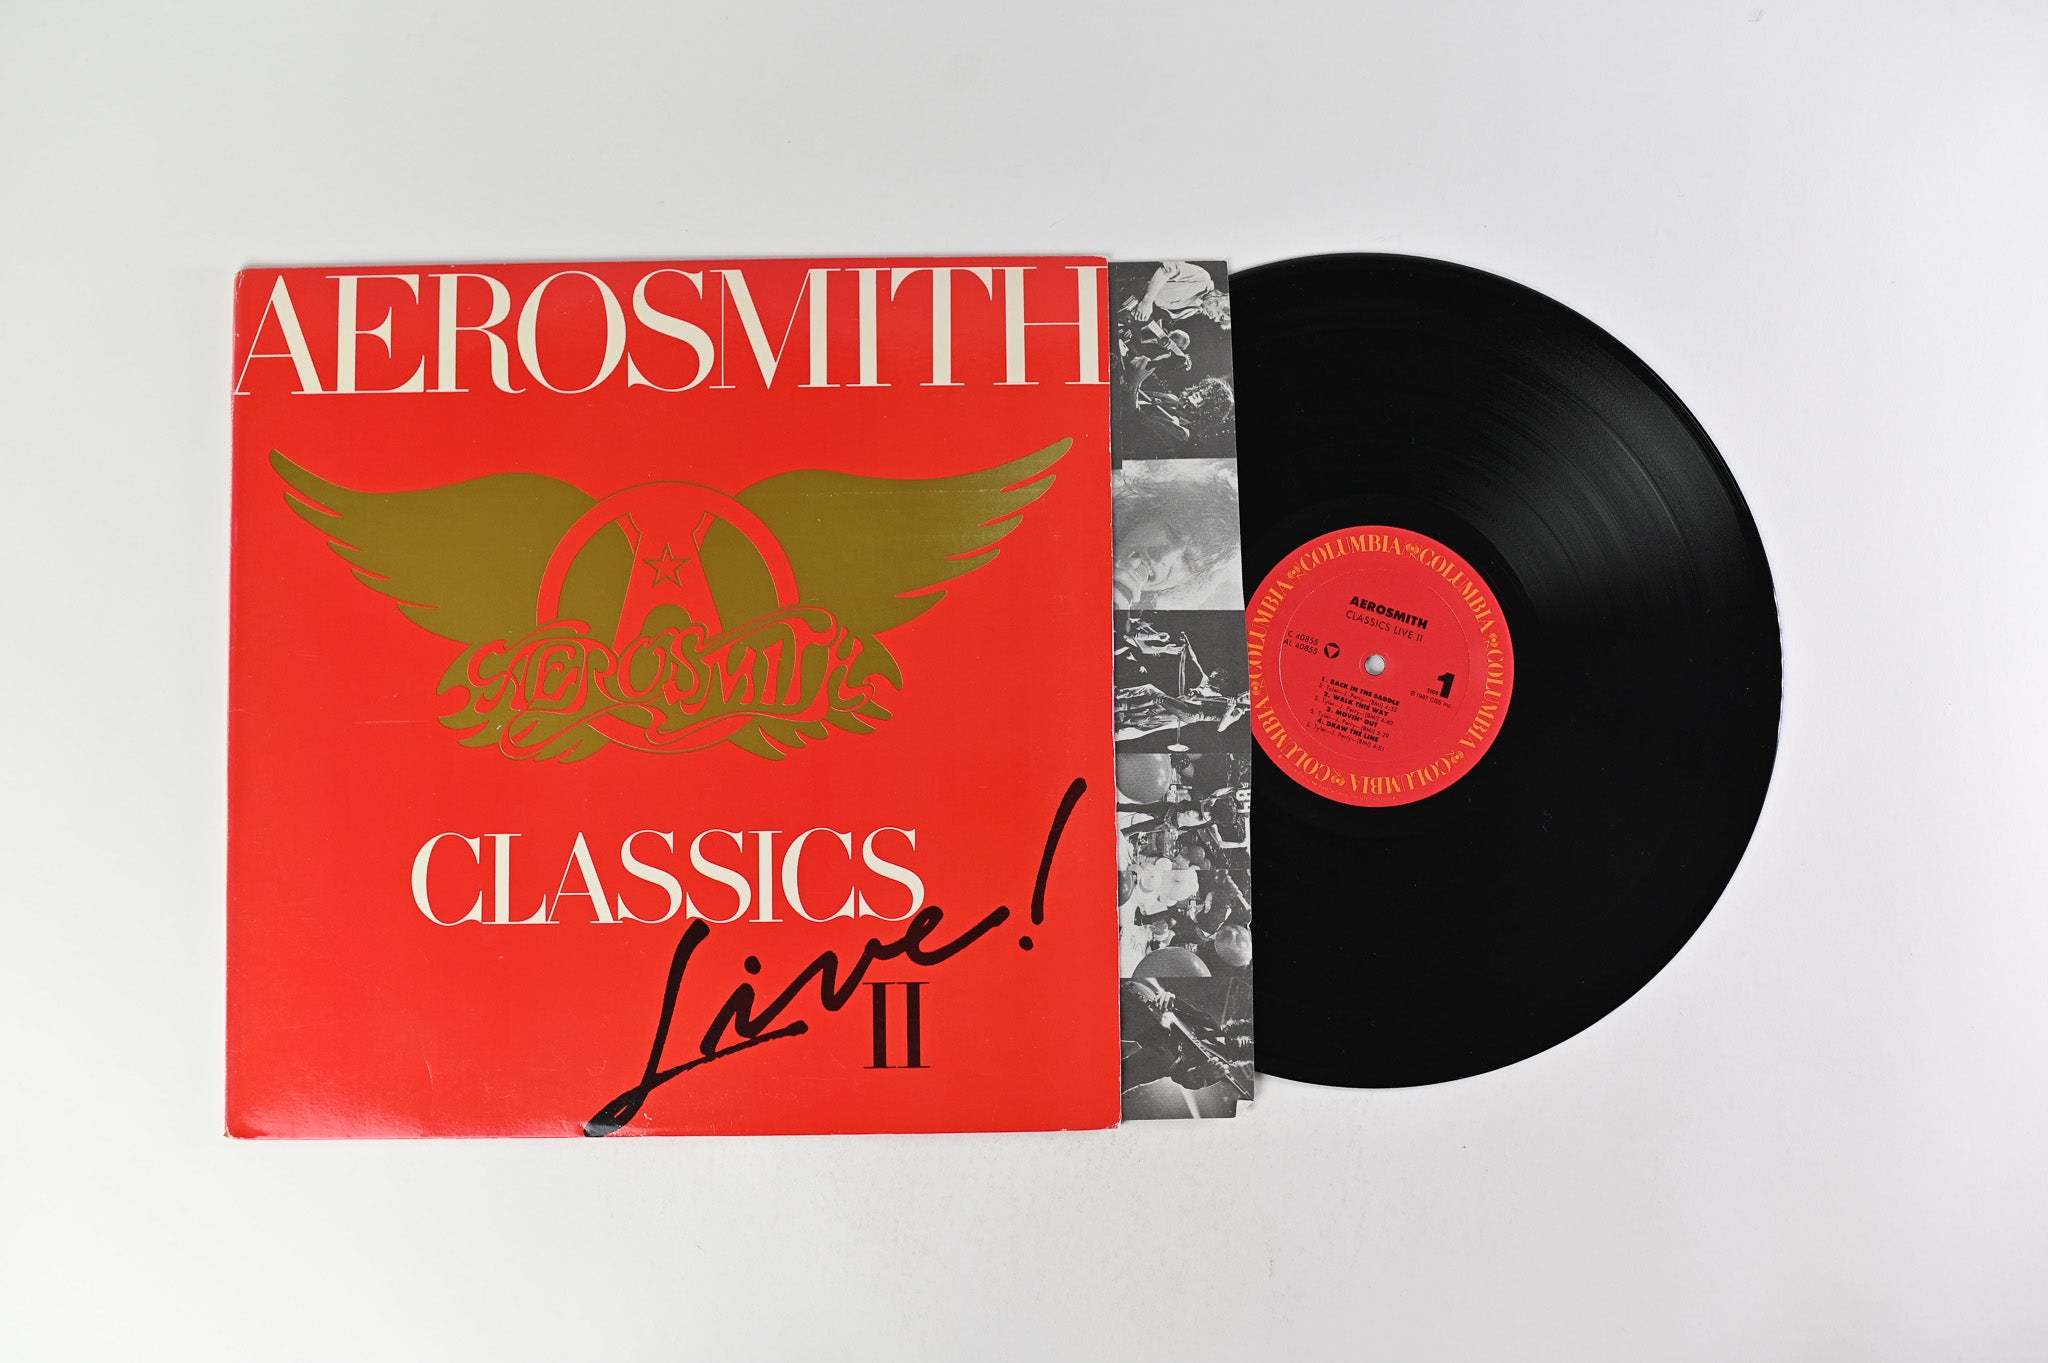 Aerosmith - Classics Live II on Columbia